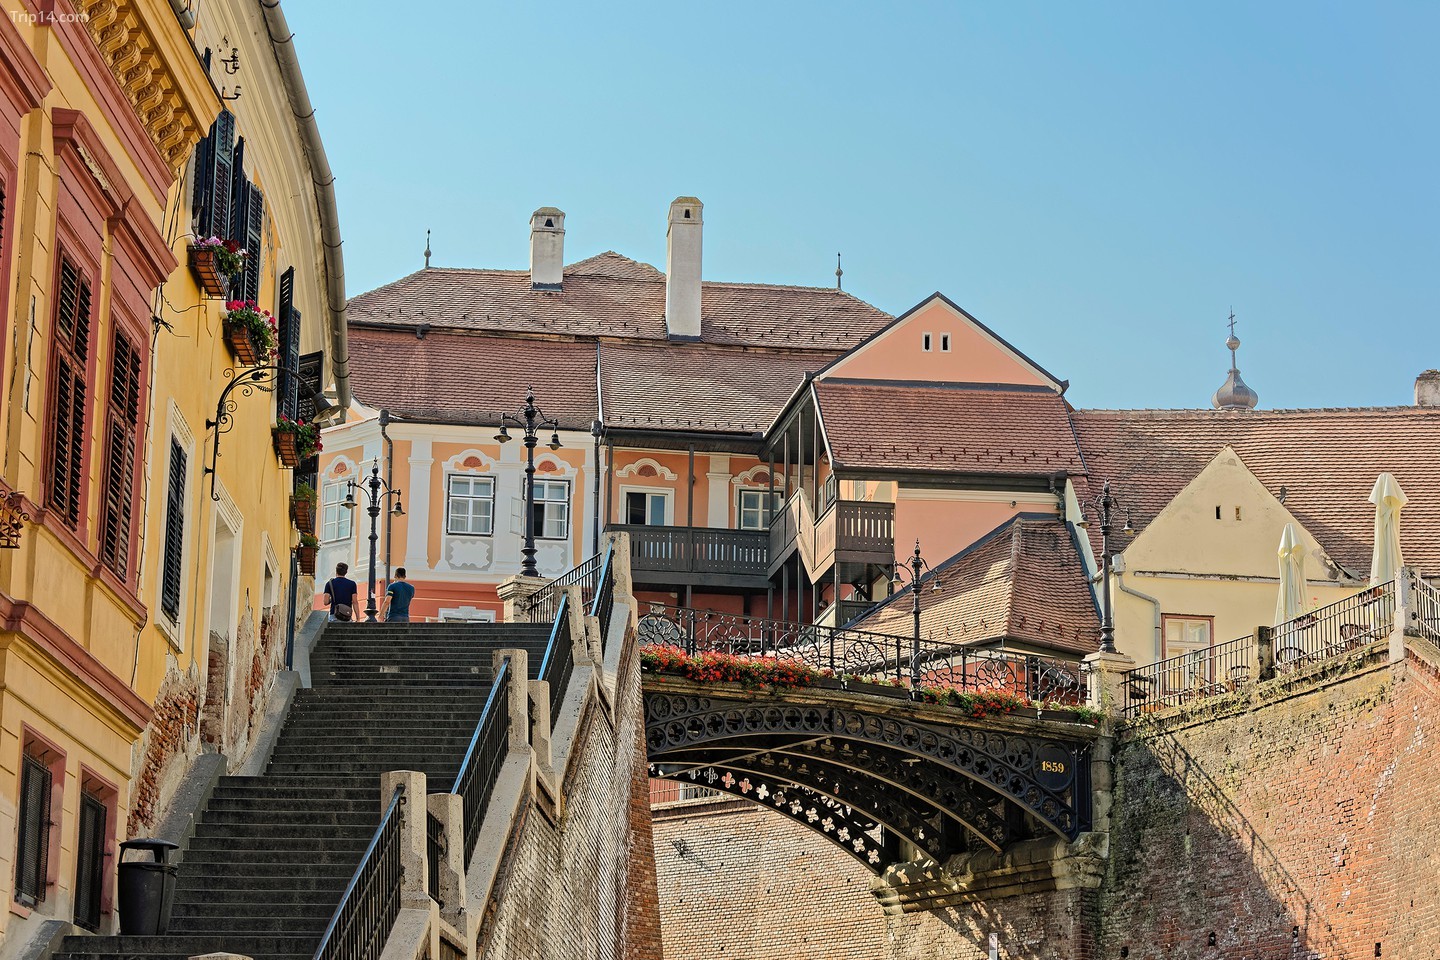  Cầu Liar, Sibiu, Romania   |   